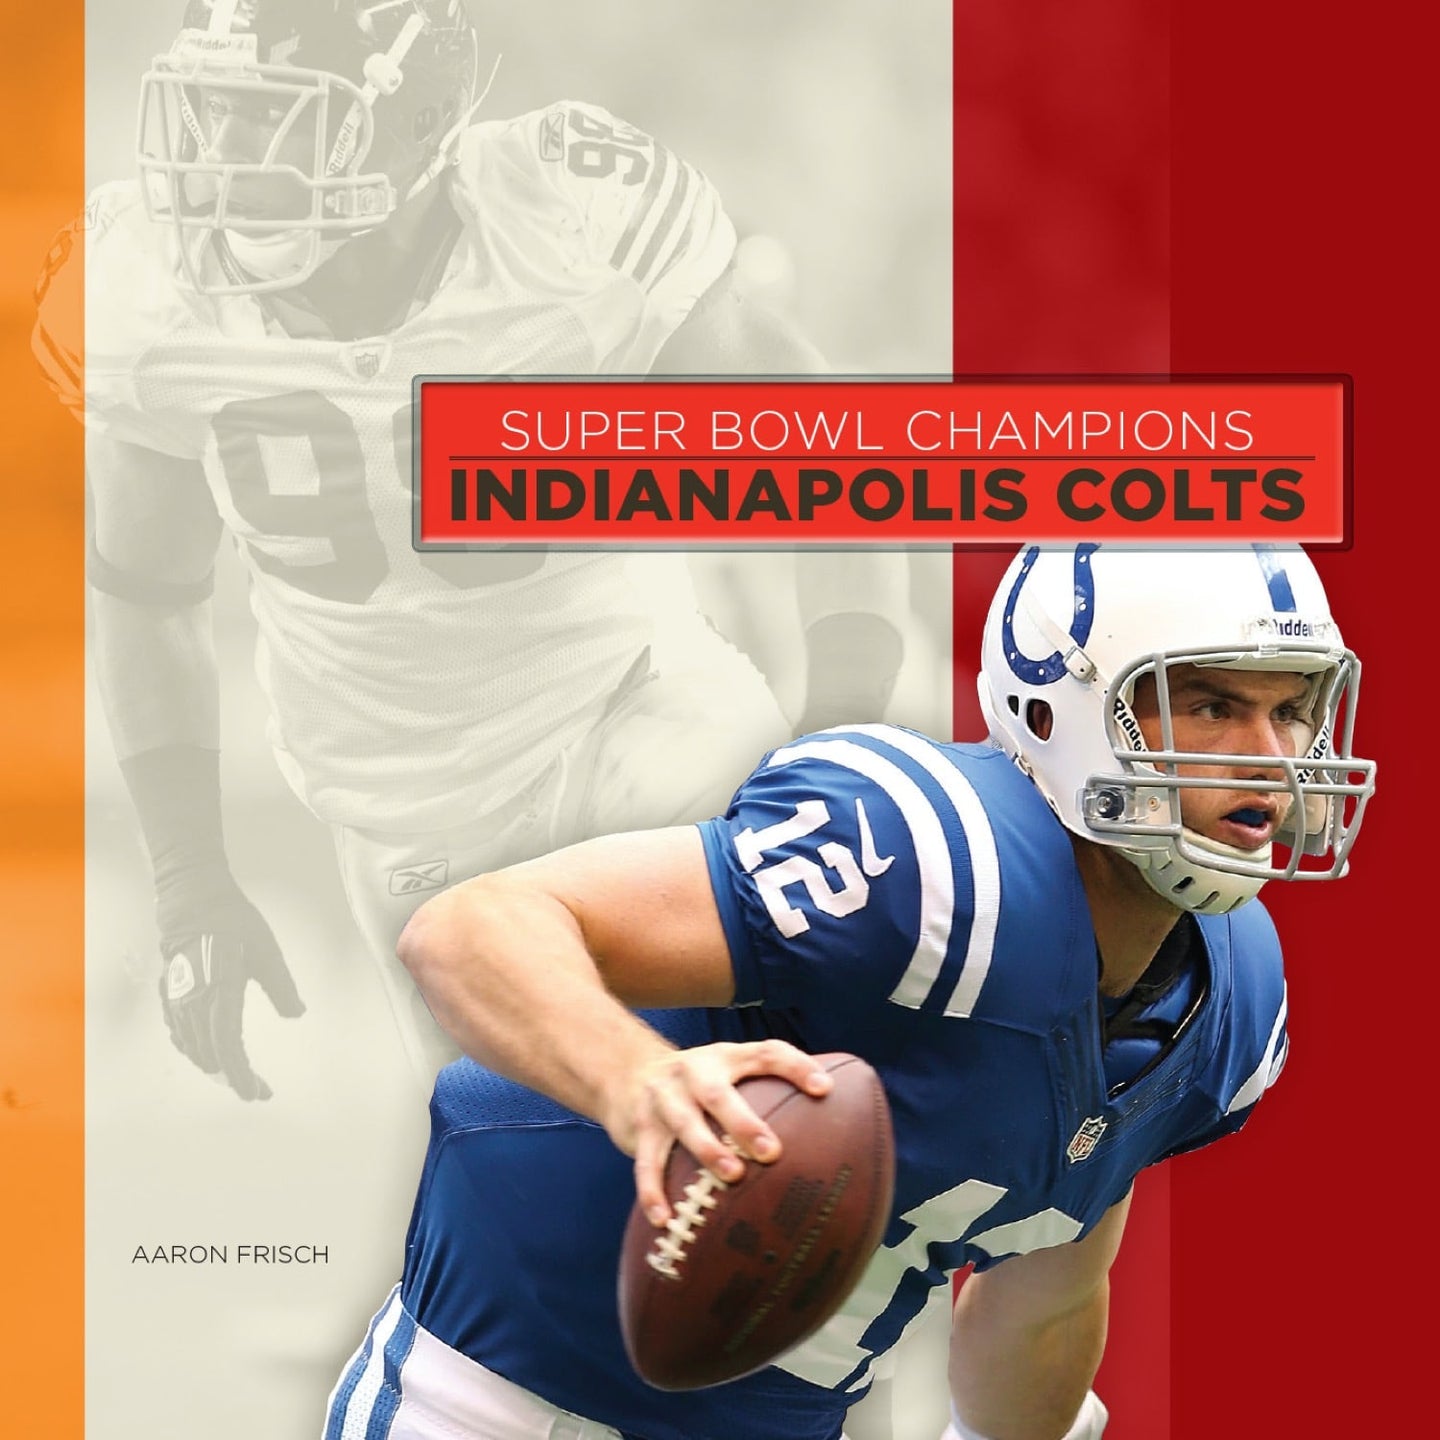 Super Bowl Champions: Indianapolis Colts (2014)